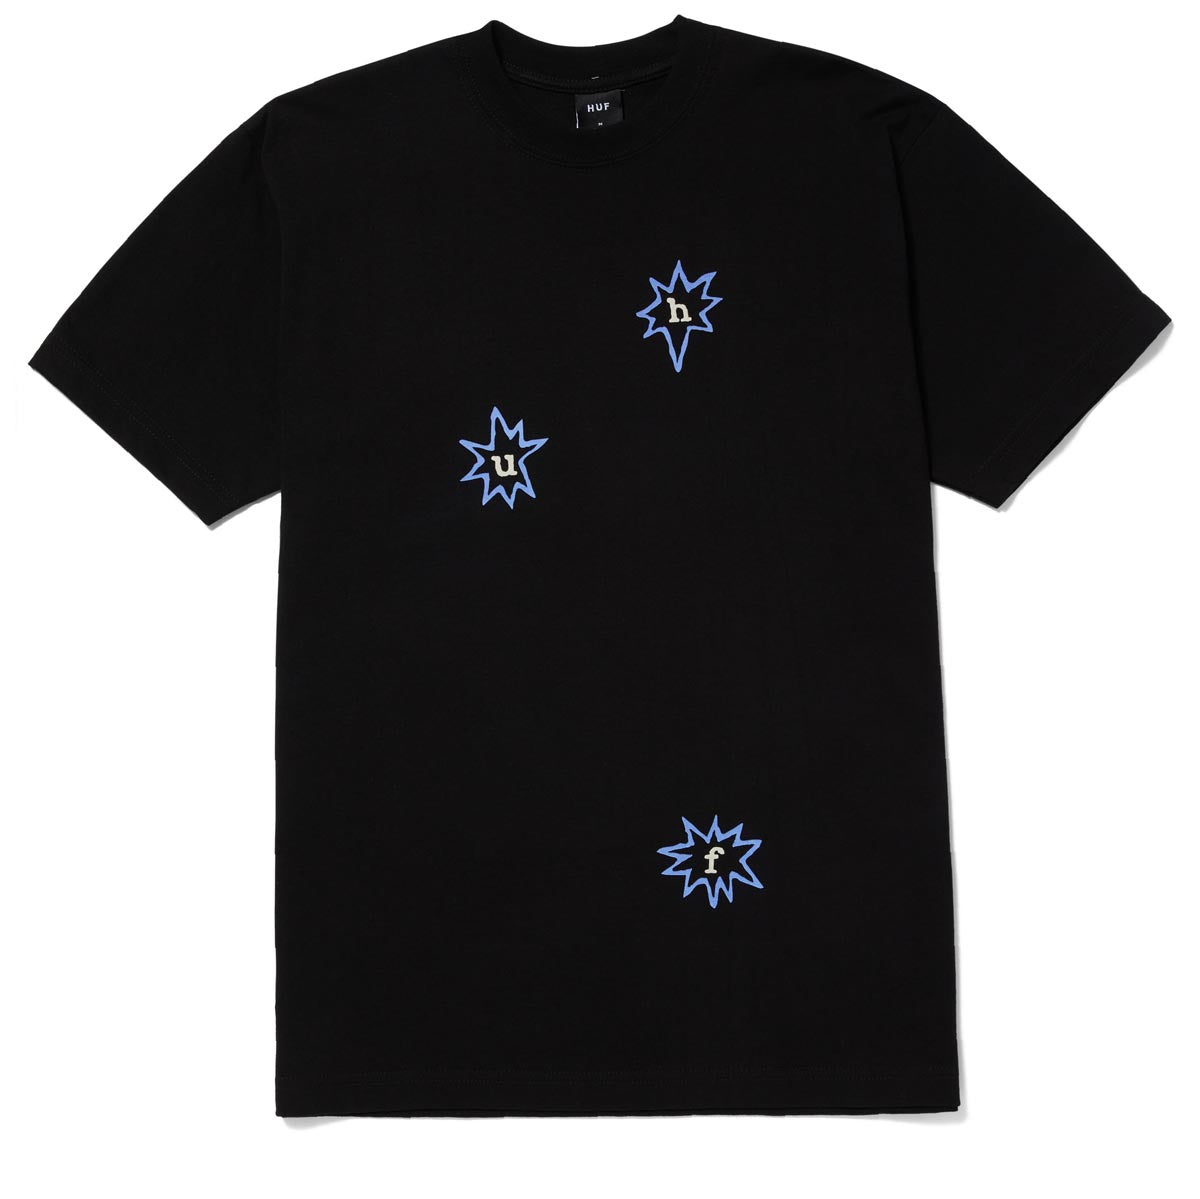 HUF Enlightenment Center T-Shirt - Black image 1